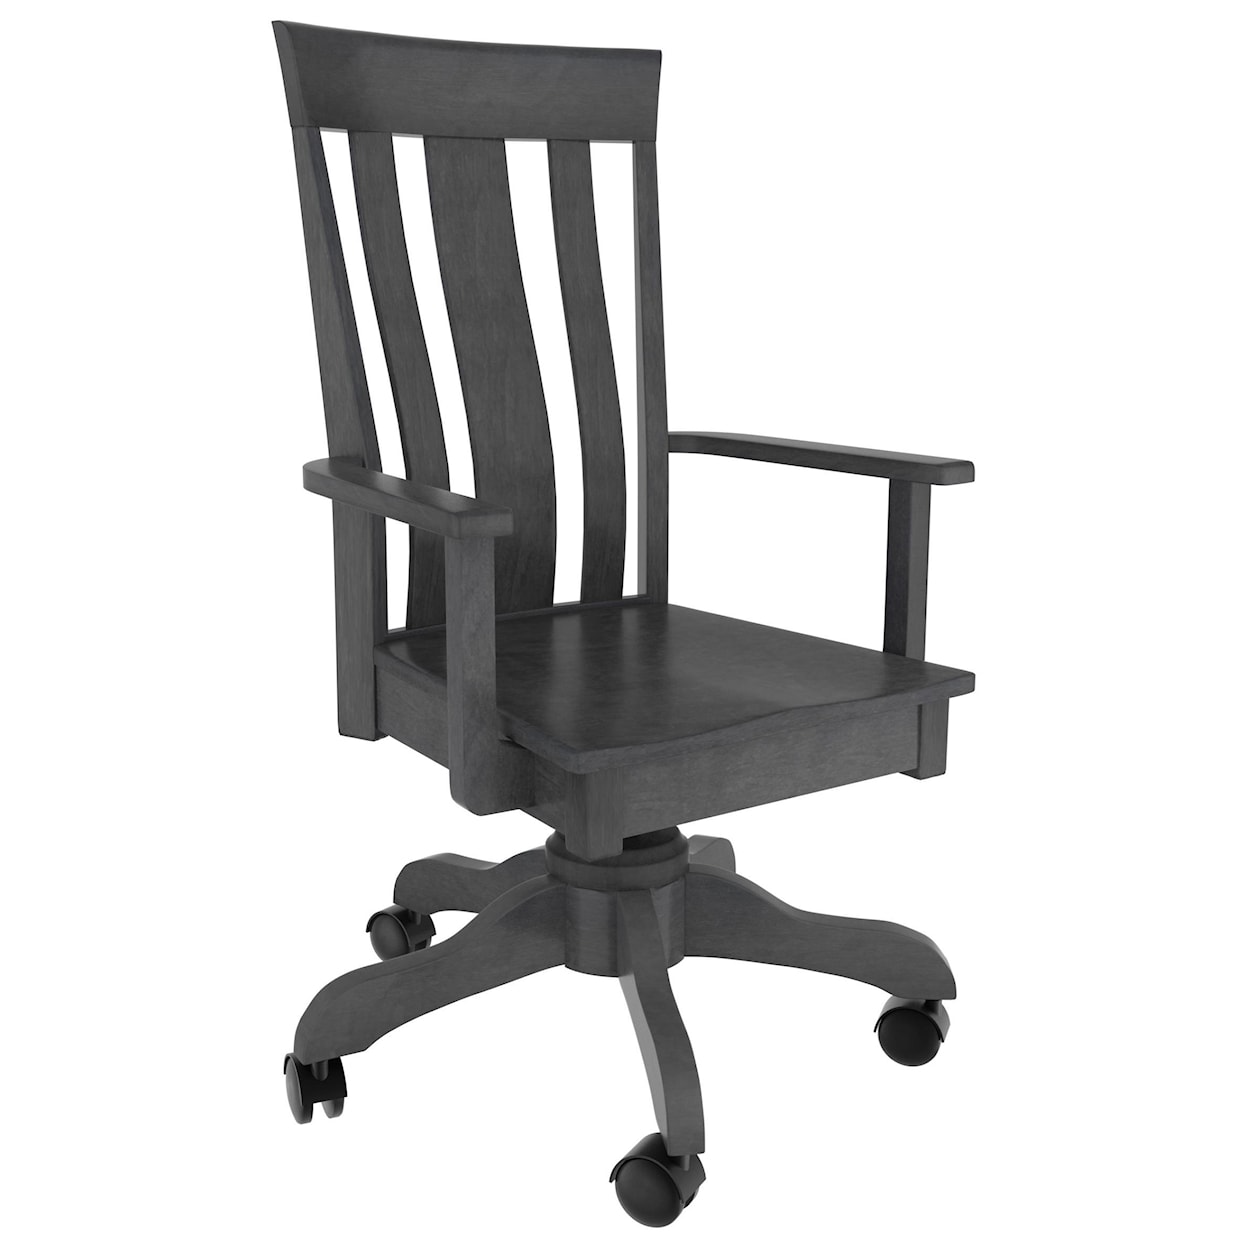 Country Comfort Woodworking McZena Desk Chair